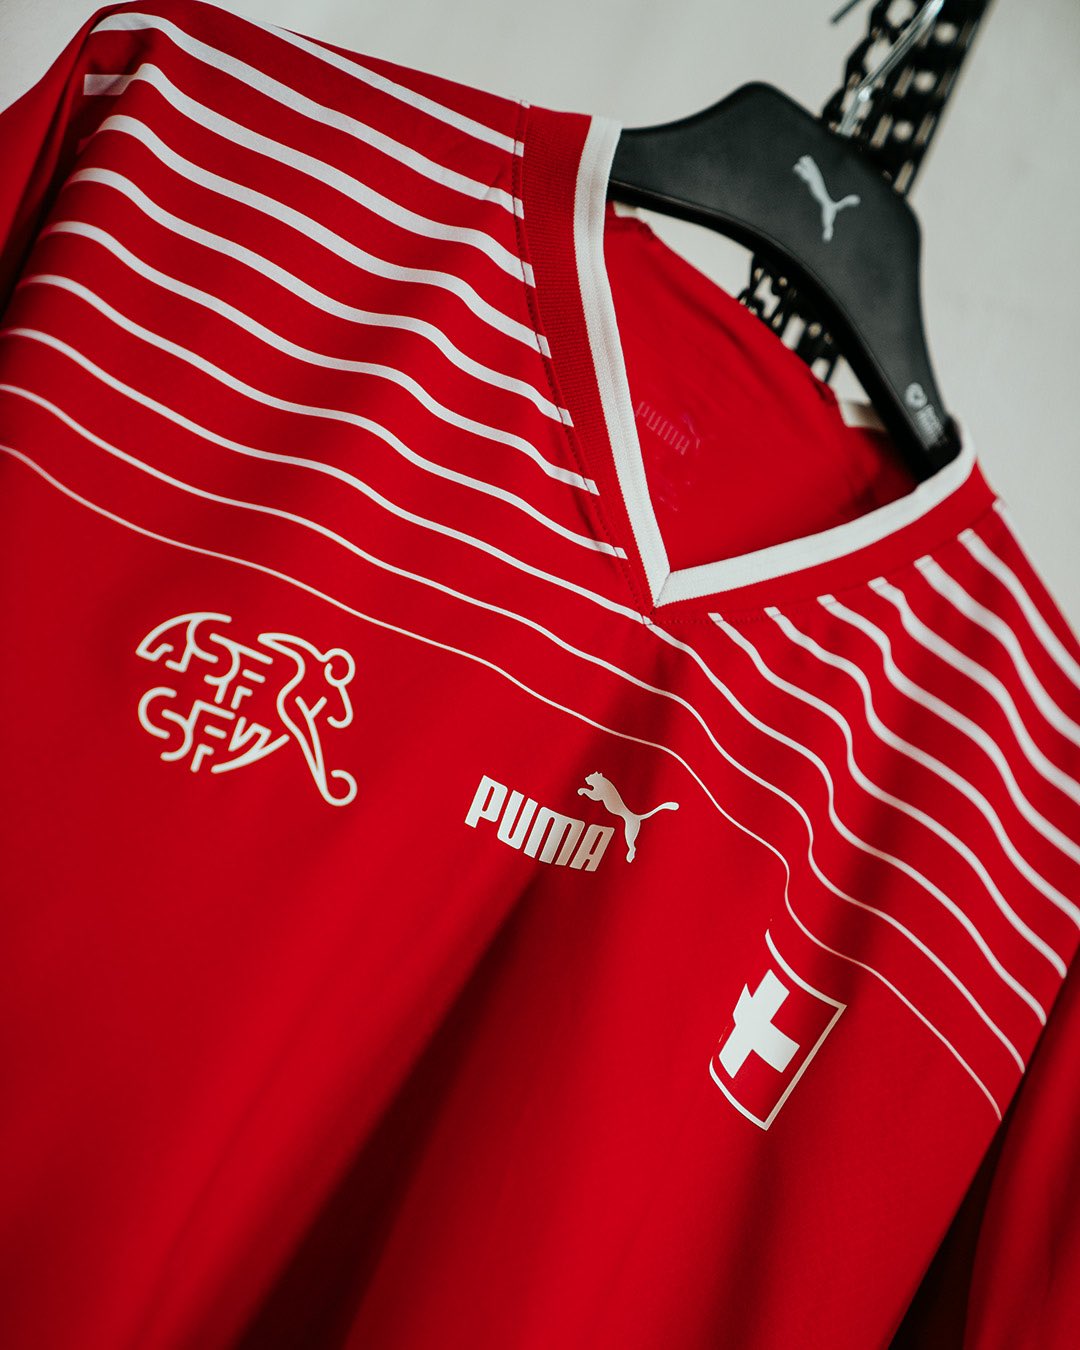 Camiseta titular de Suiza para Qatar 2022 (Fuente: Puma Football)